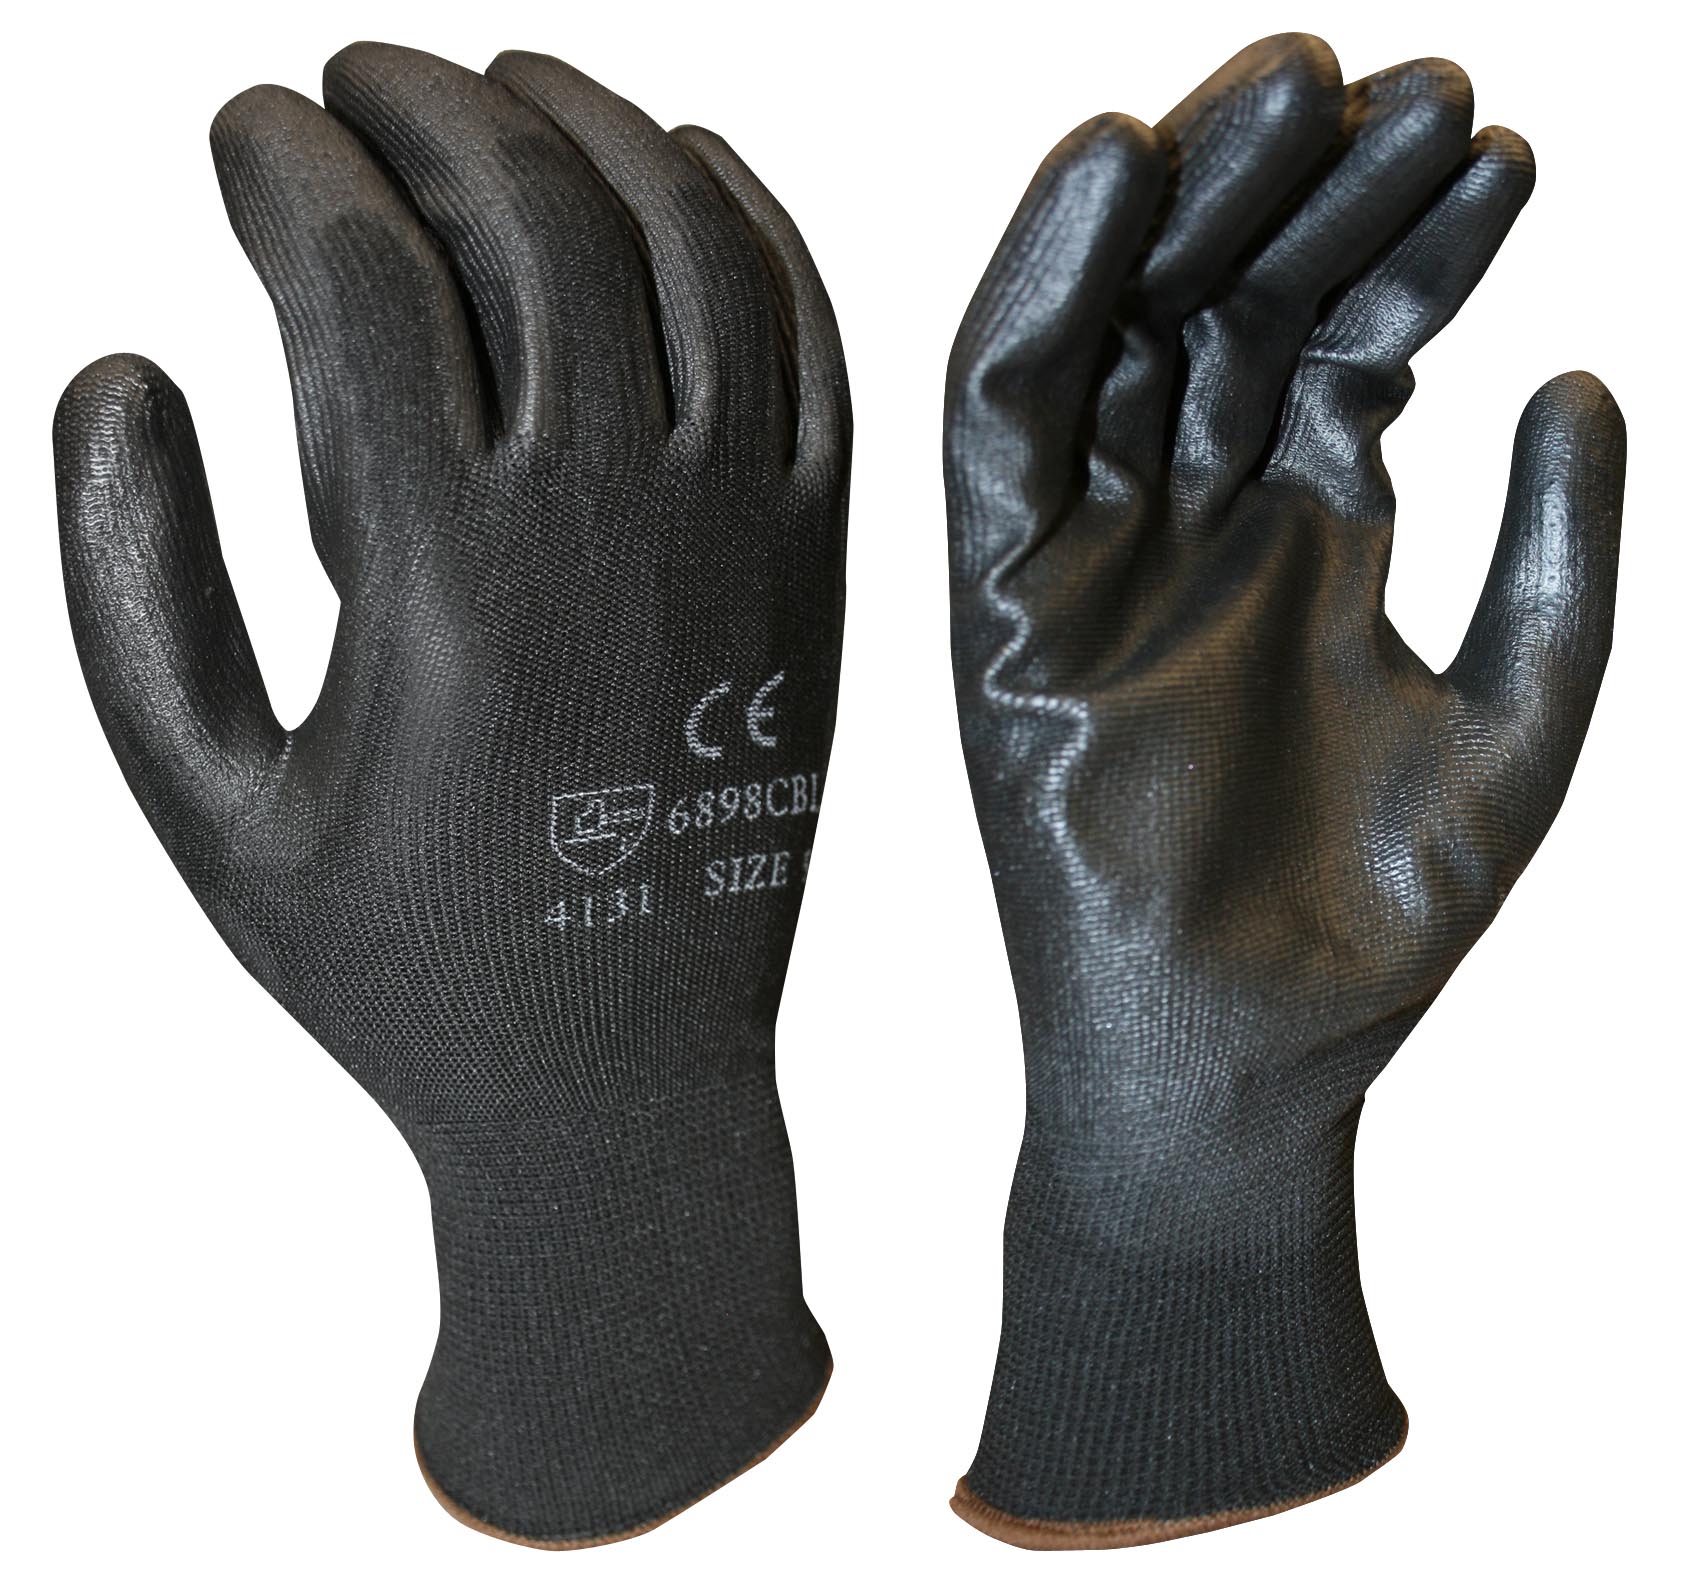 PUG™ Gray Lightweight Polyurethane Coated Anti-Static/Electrostatic  Compliant Gloves - PUG-13